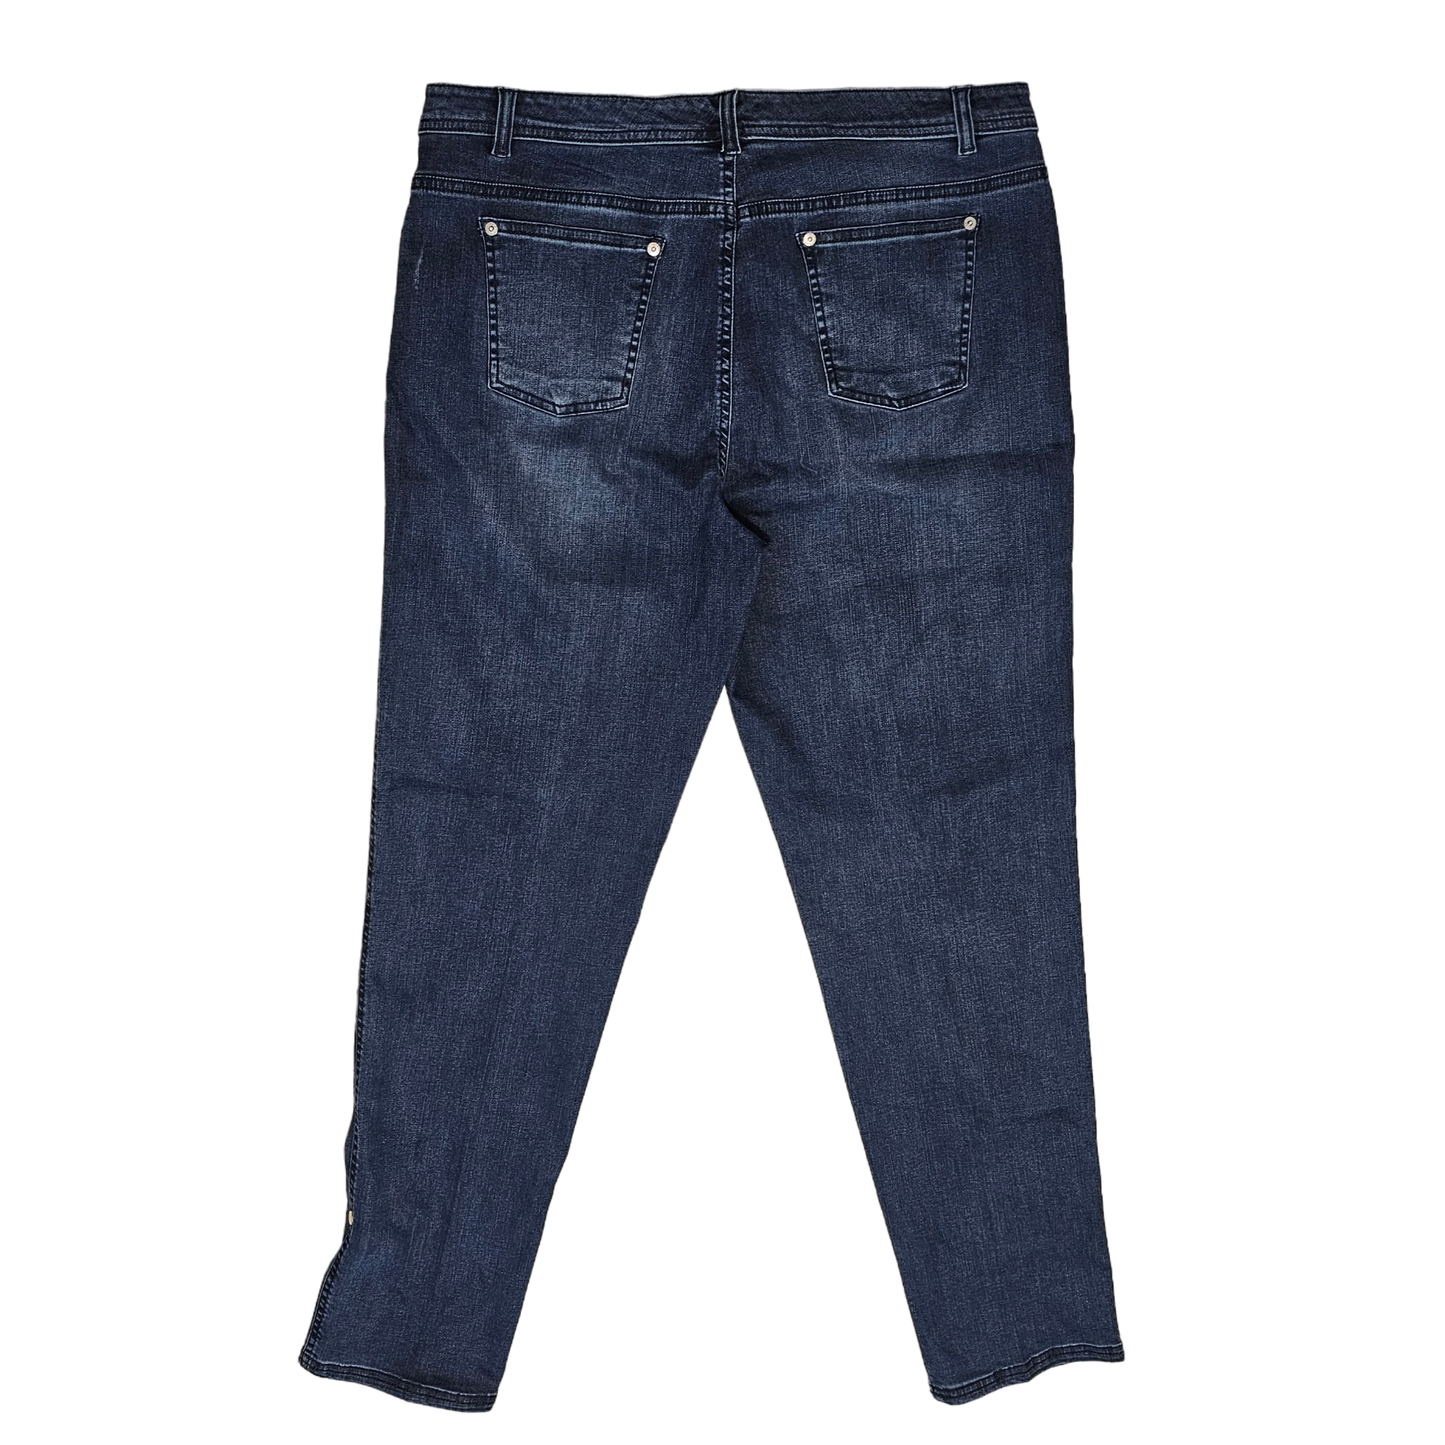 Jeans Designer By St. John  Size: 16